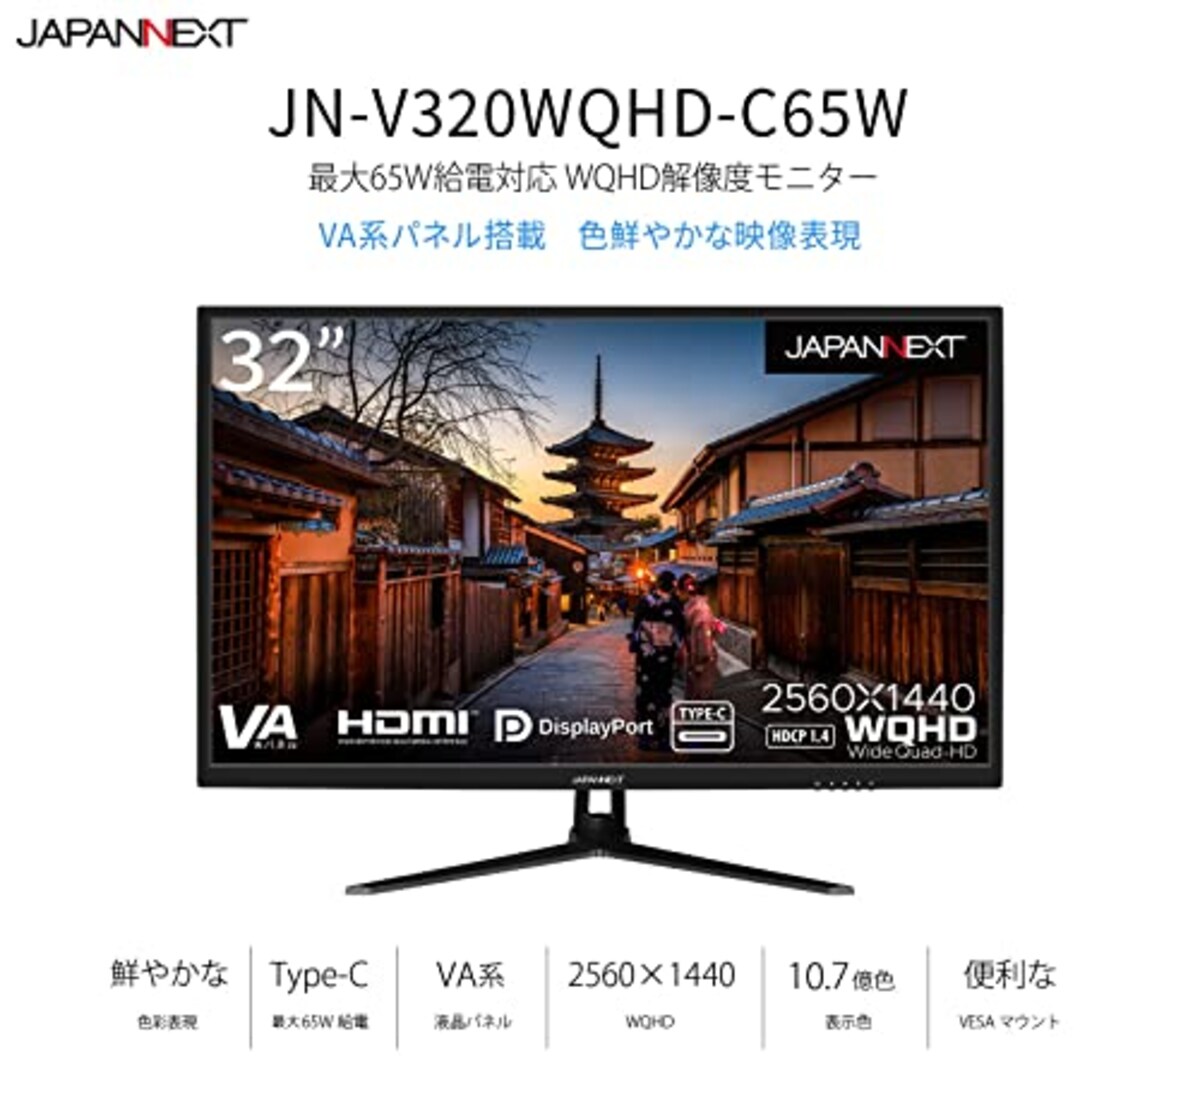  JAPANNEXT VAパネル搭載32インチ液晶モニター WQHD解像度 USB-C給電対応 JN-V320WQHD-C65W HDMI DP USB-C(65W給電) PIP/PBP機能搭載 sRGB 100%画像2 